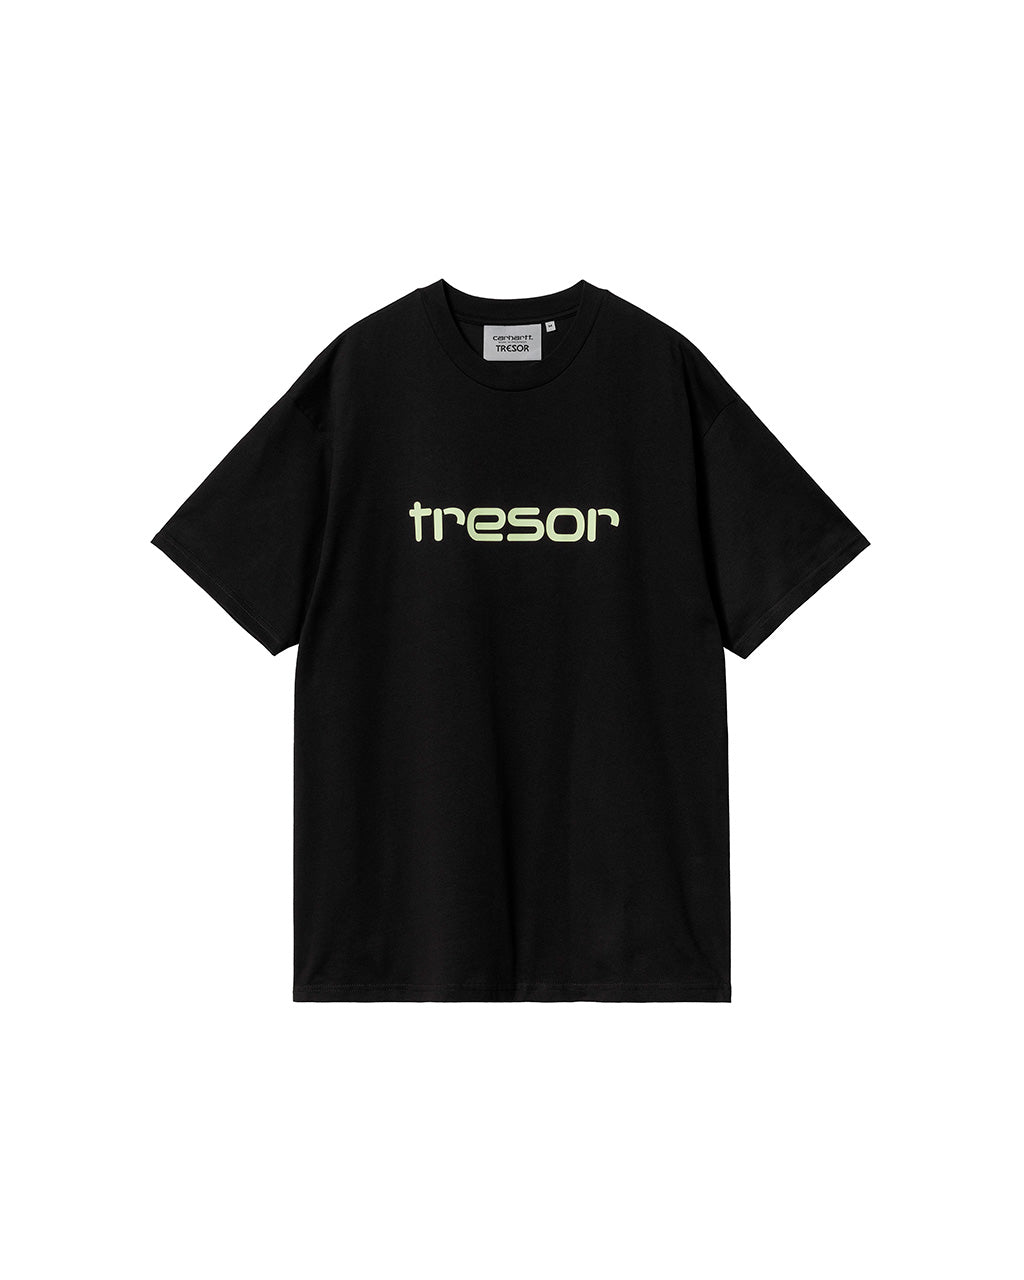 Carhartt WIP x TRESOR Techno Alliance S/S T-shirt